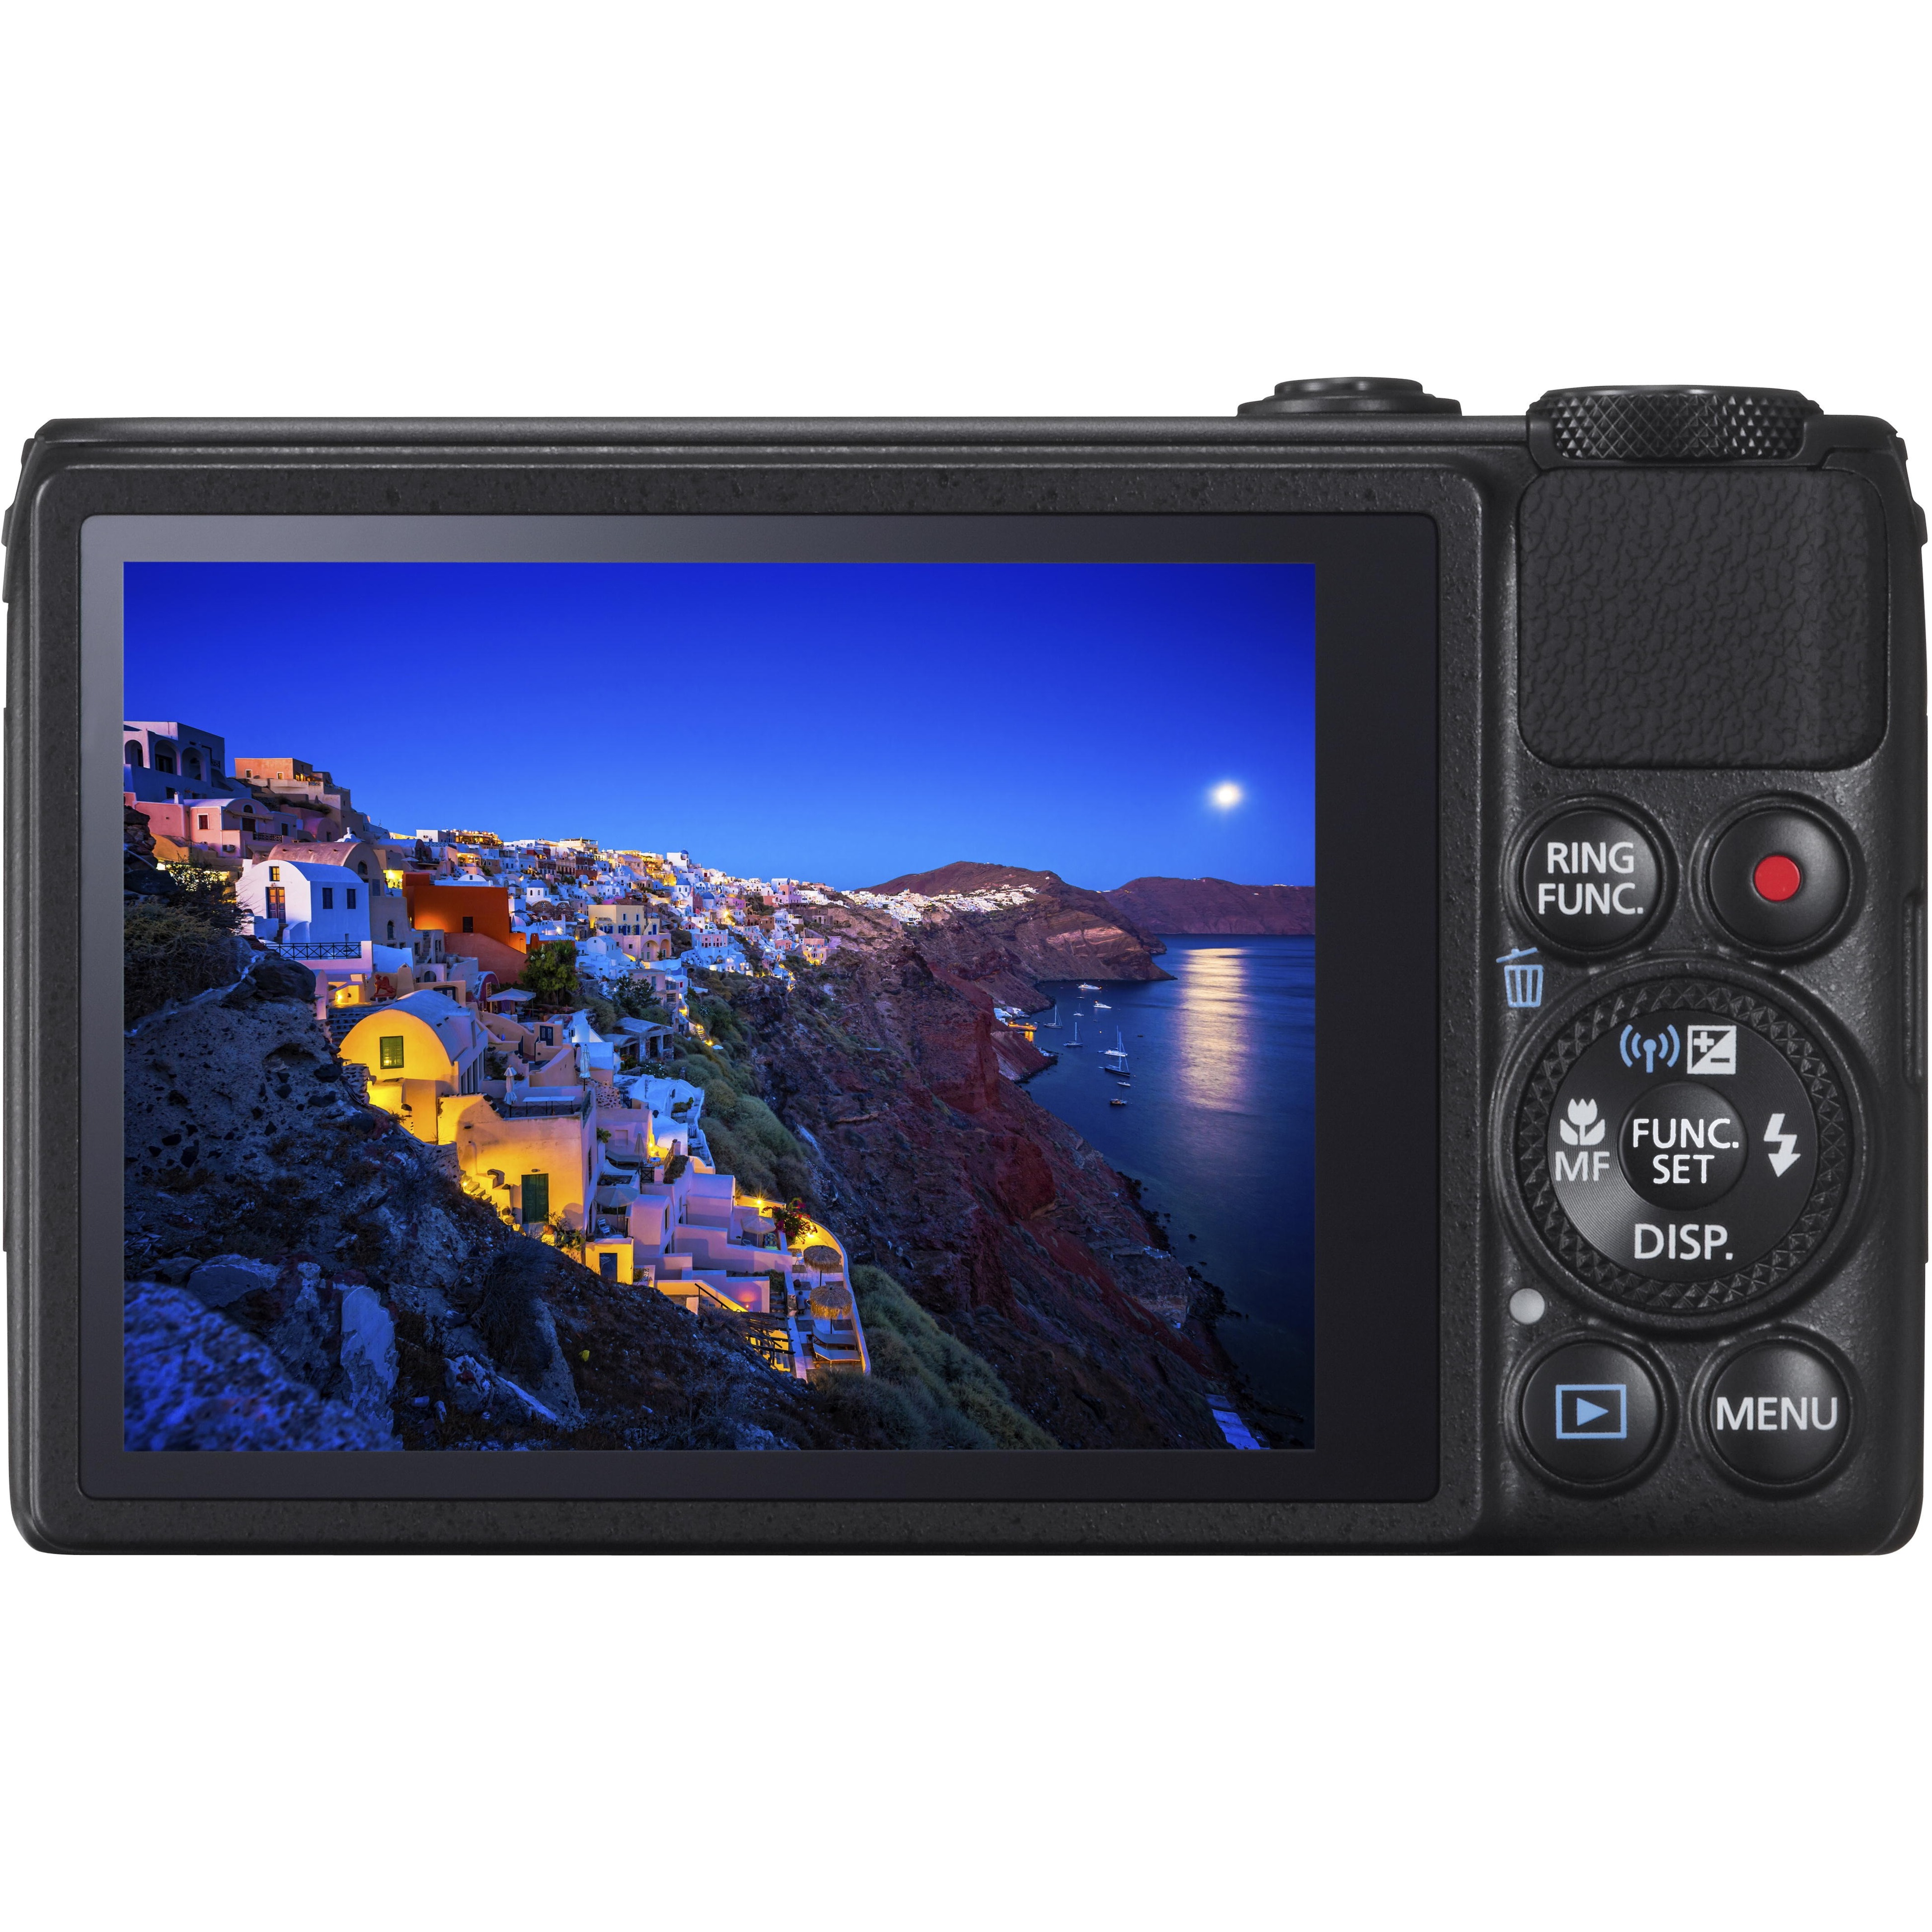 Canon PowerShot S120 12.1 Megapixel Compact Camera, Black - image 5 of 6